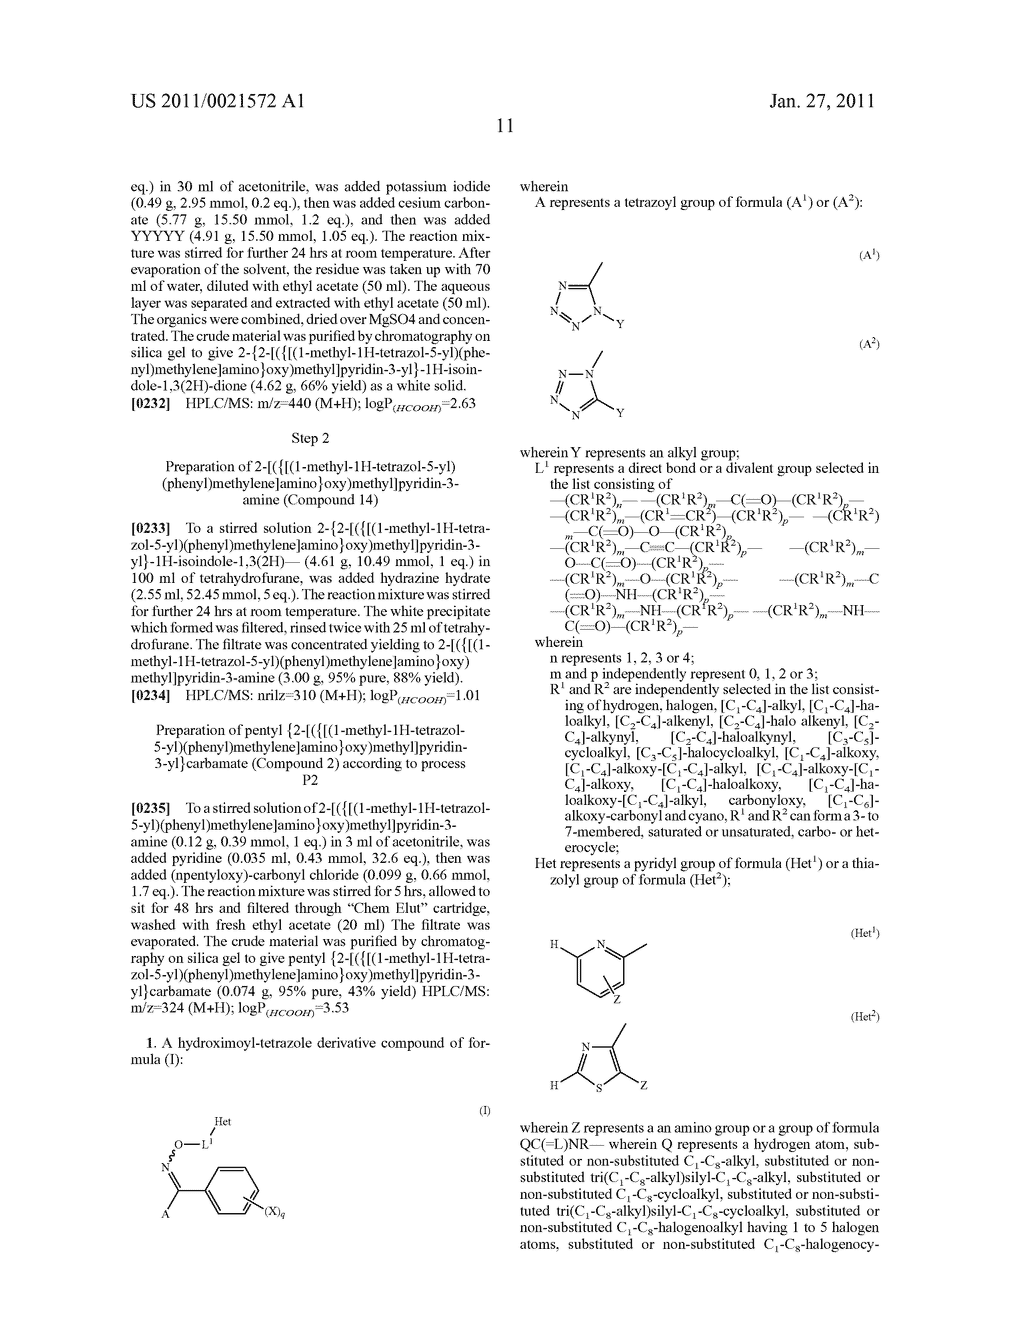 FUNGICIDE HYDROXIMOYL-TETRAZOLE DERIVATIVES - diagram, schematic, and image 12